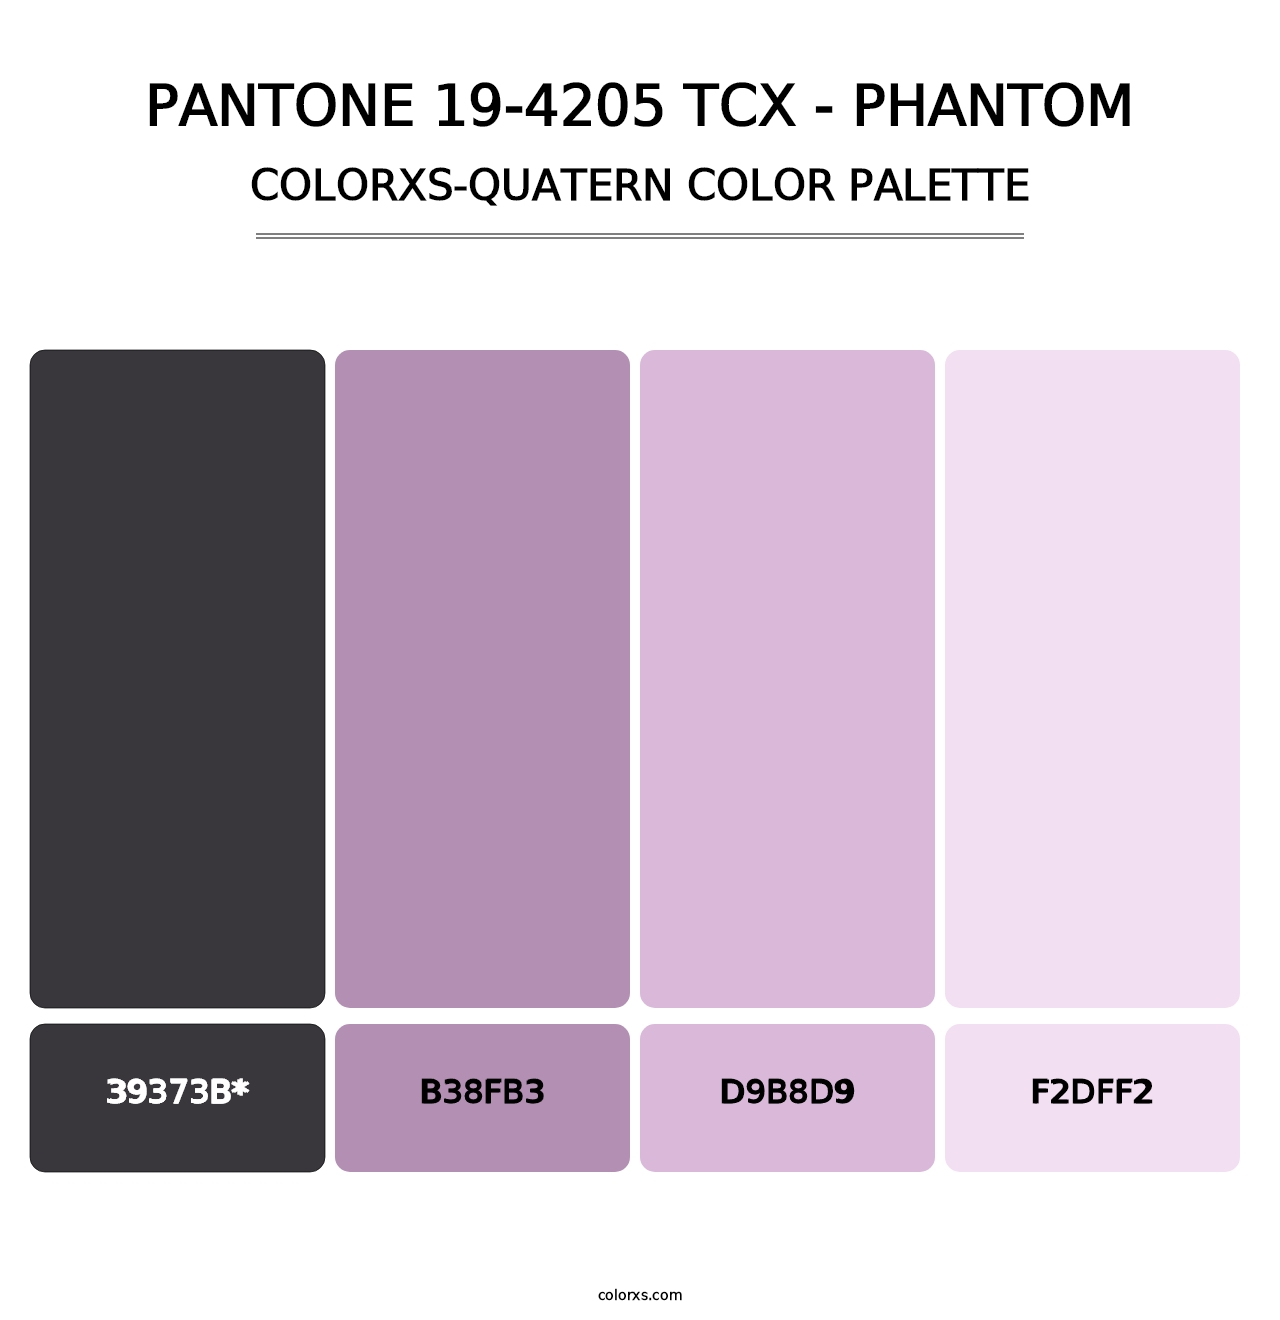 PANTONE 19-4205 TCX - Phantom - Colorxs Quatern Palette